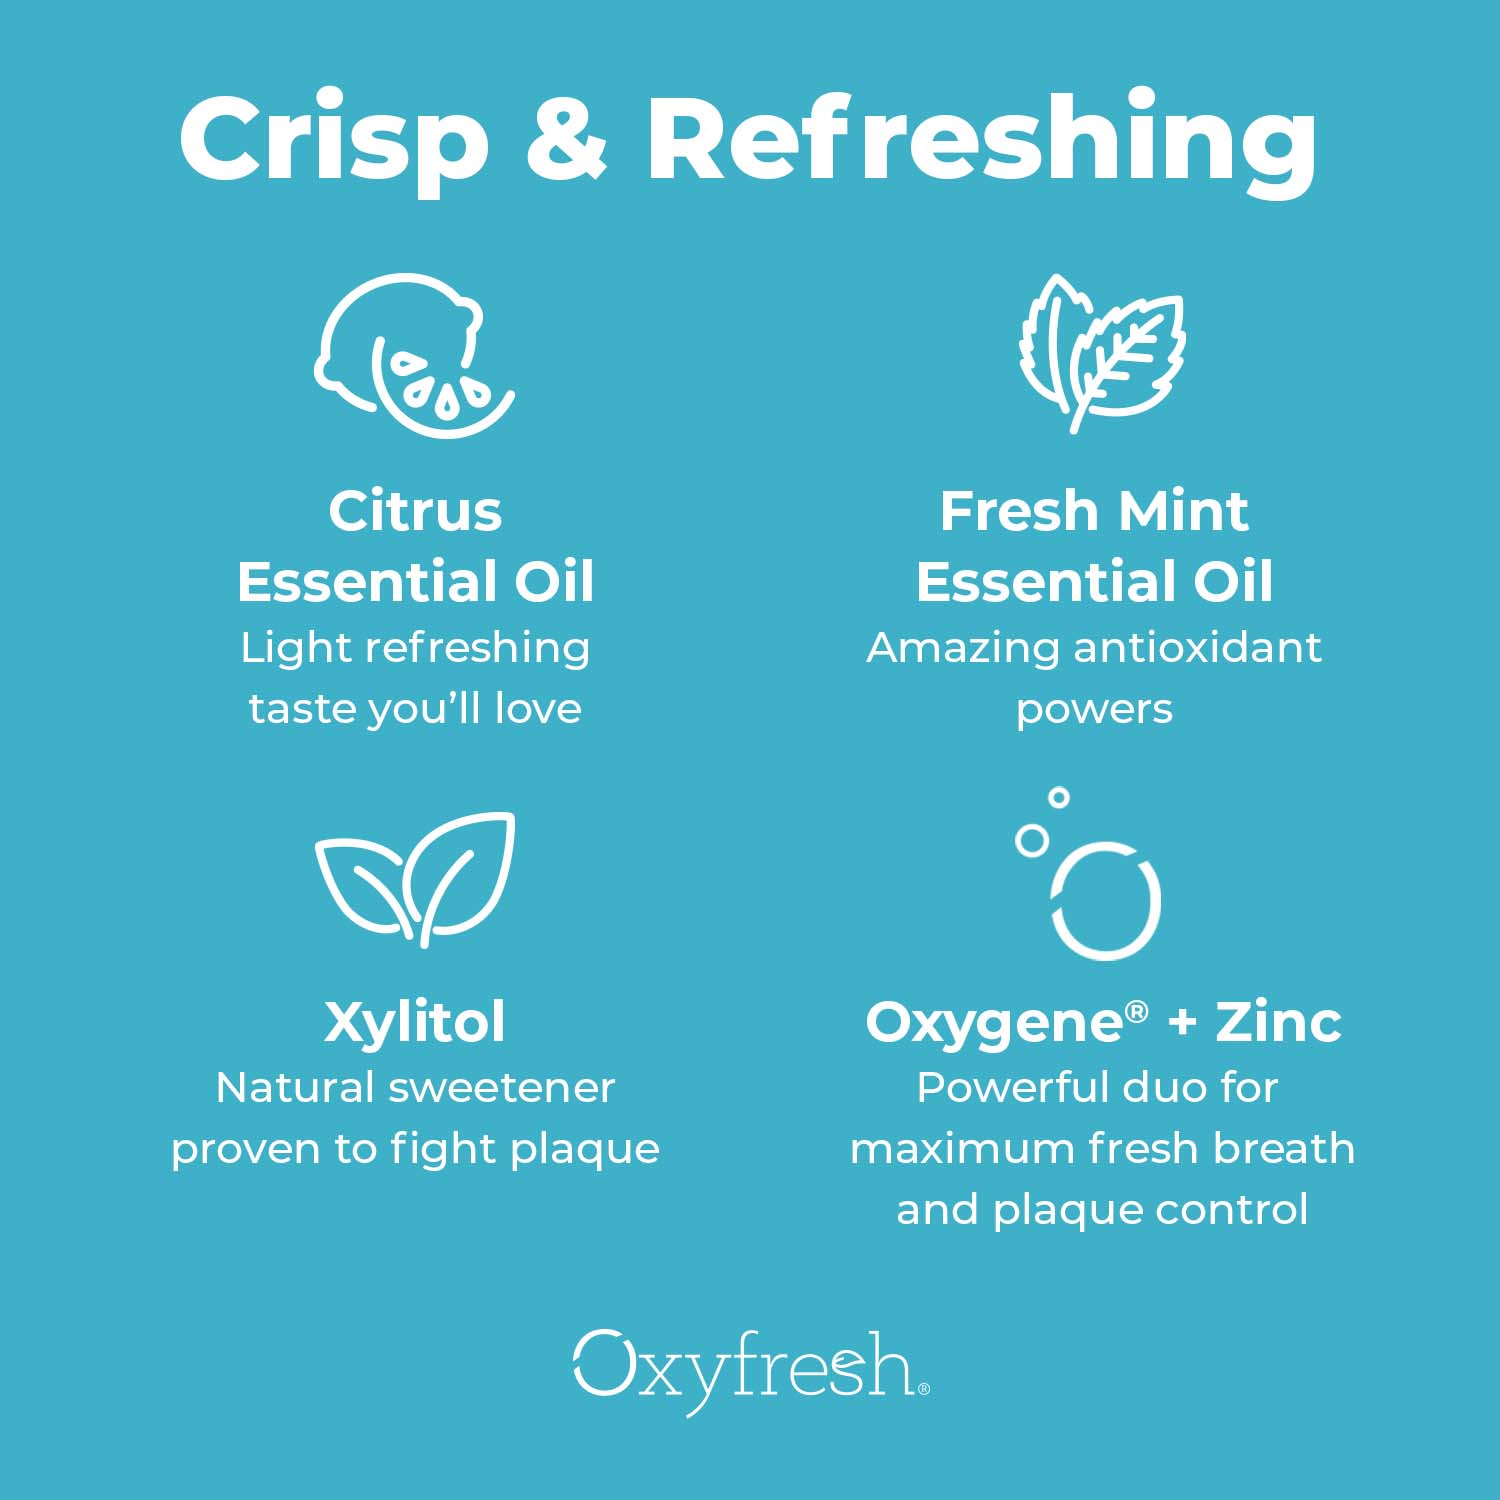 oxyfresh-lemon-mint-mouthwash-is-crisp-&-refreshing-with-citrus-essential-oil-fresh-mint-essential-oil-xylitol-oxygene-and-zinc